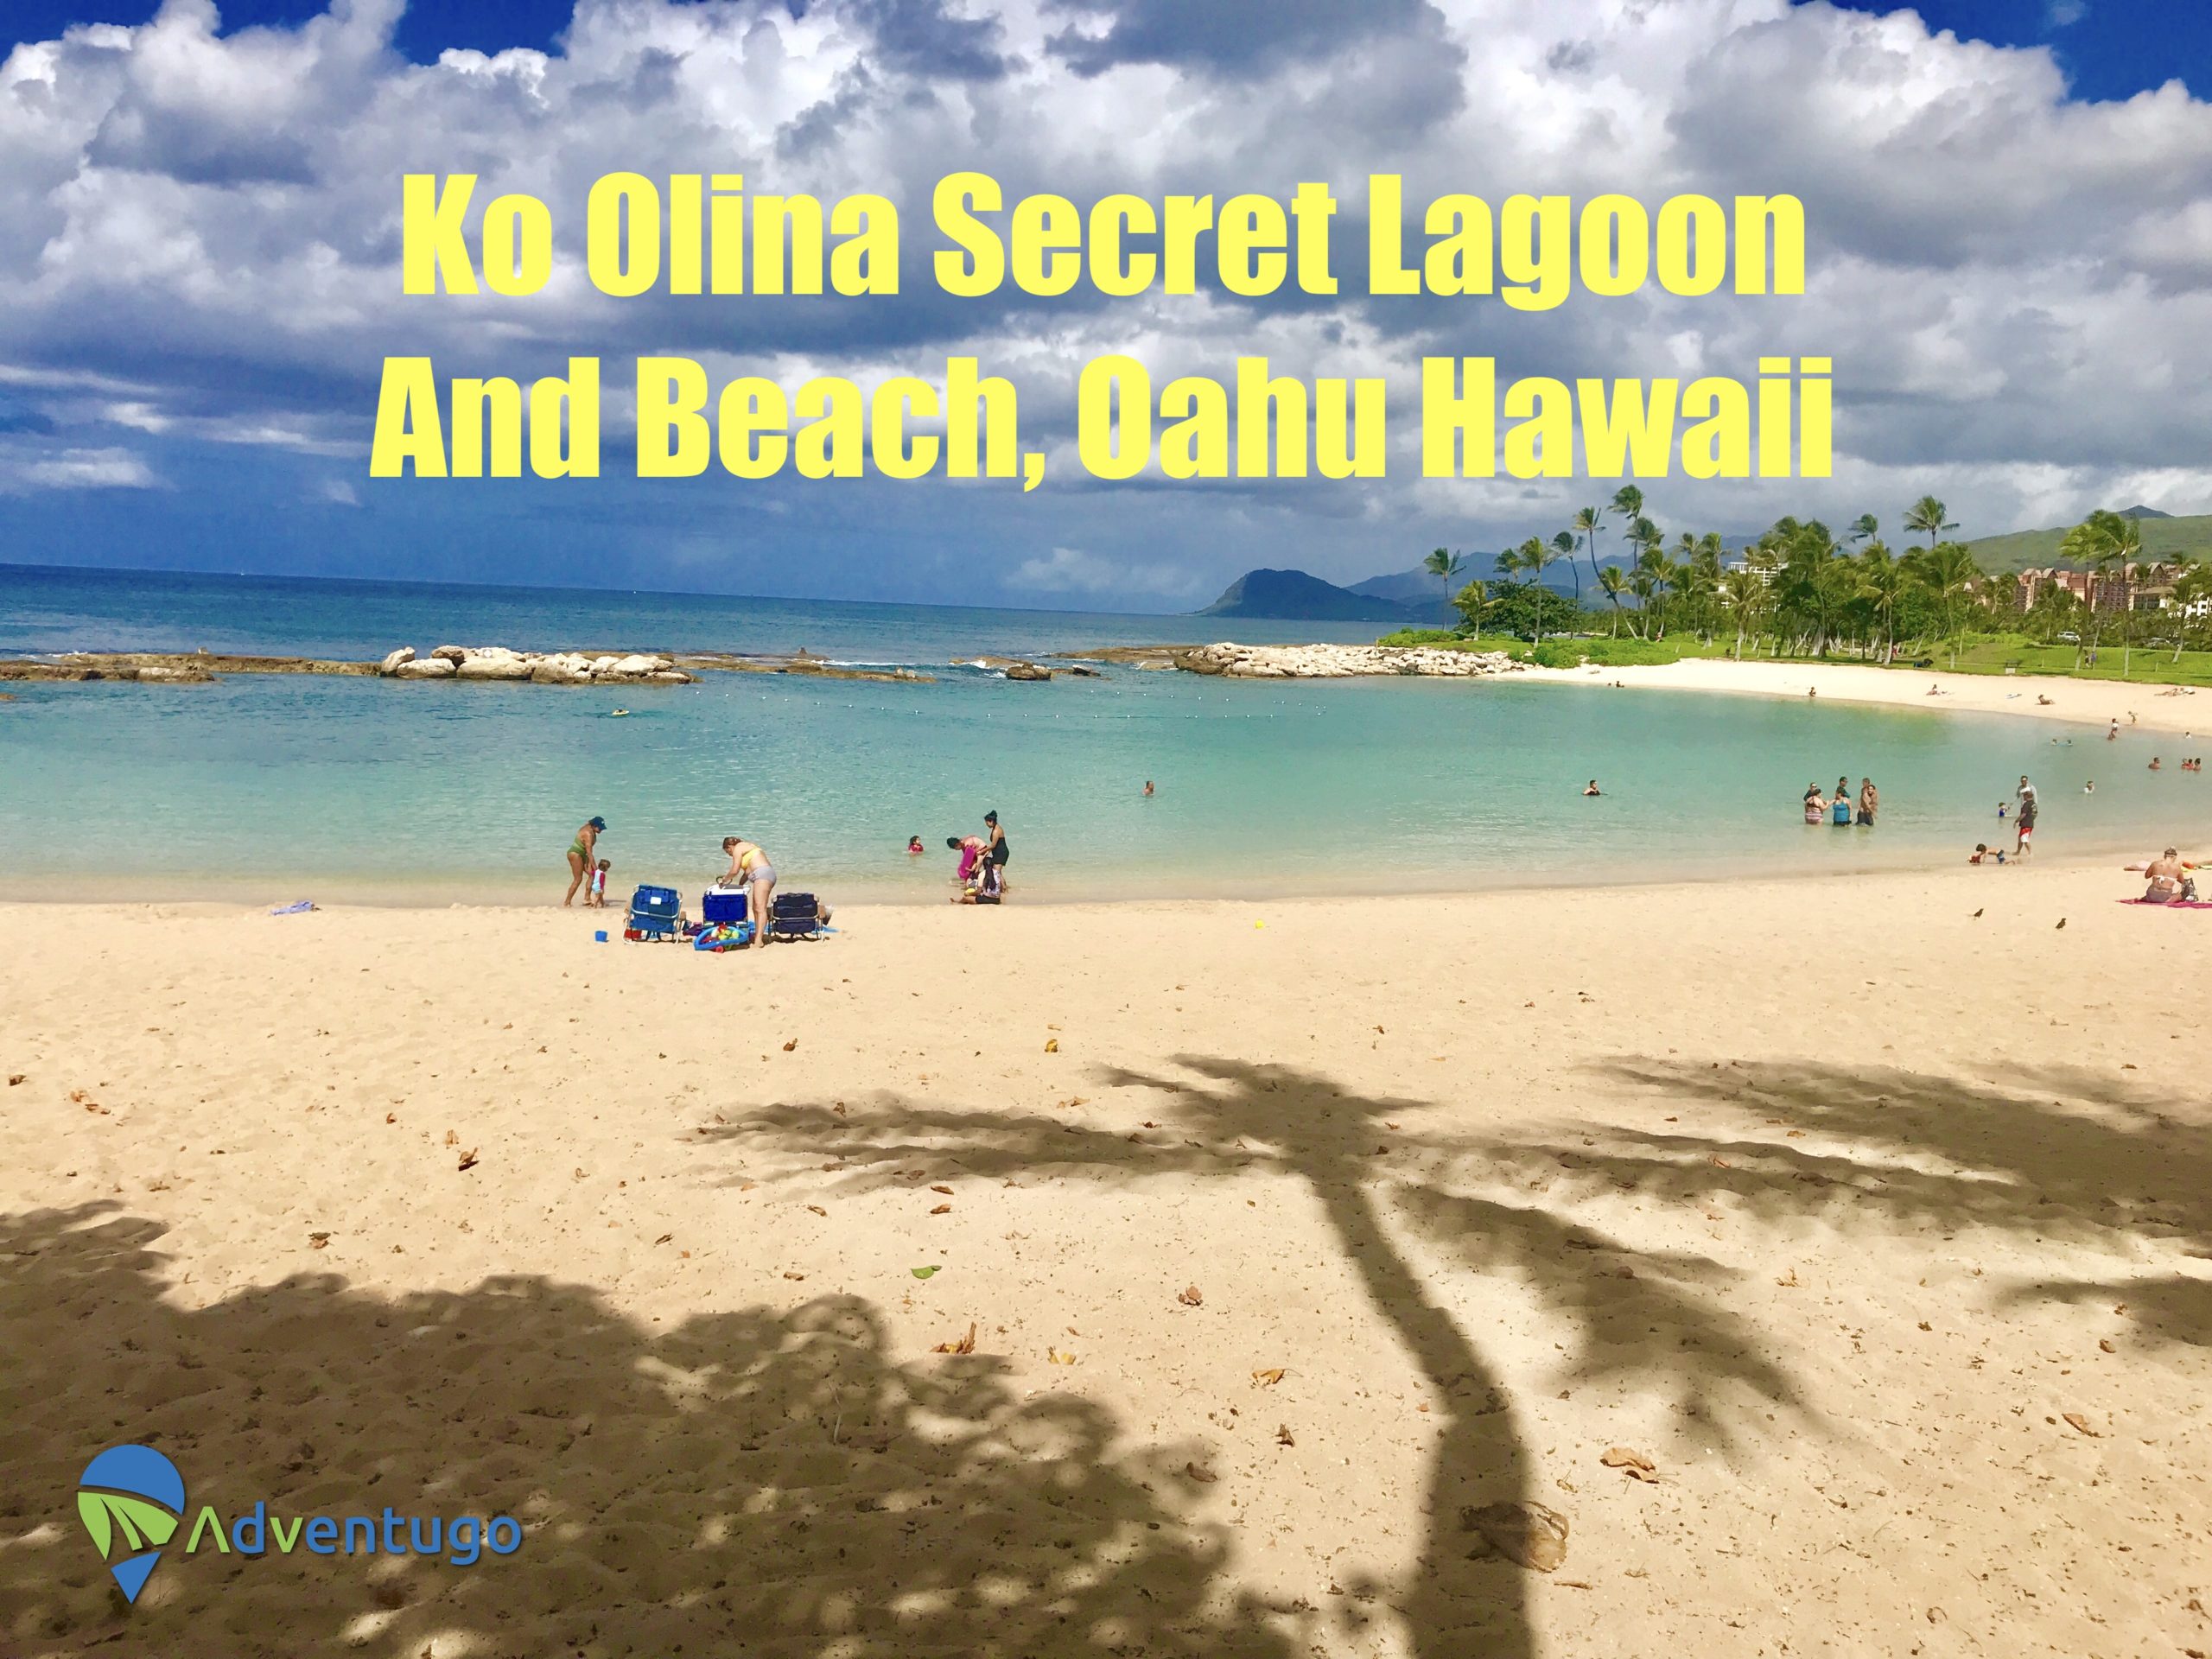 Ko Olina Oahu Secret Lagoon and beach Ultimate guide